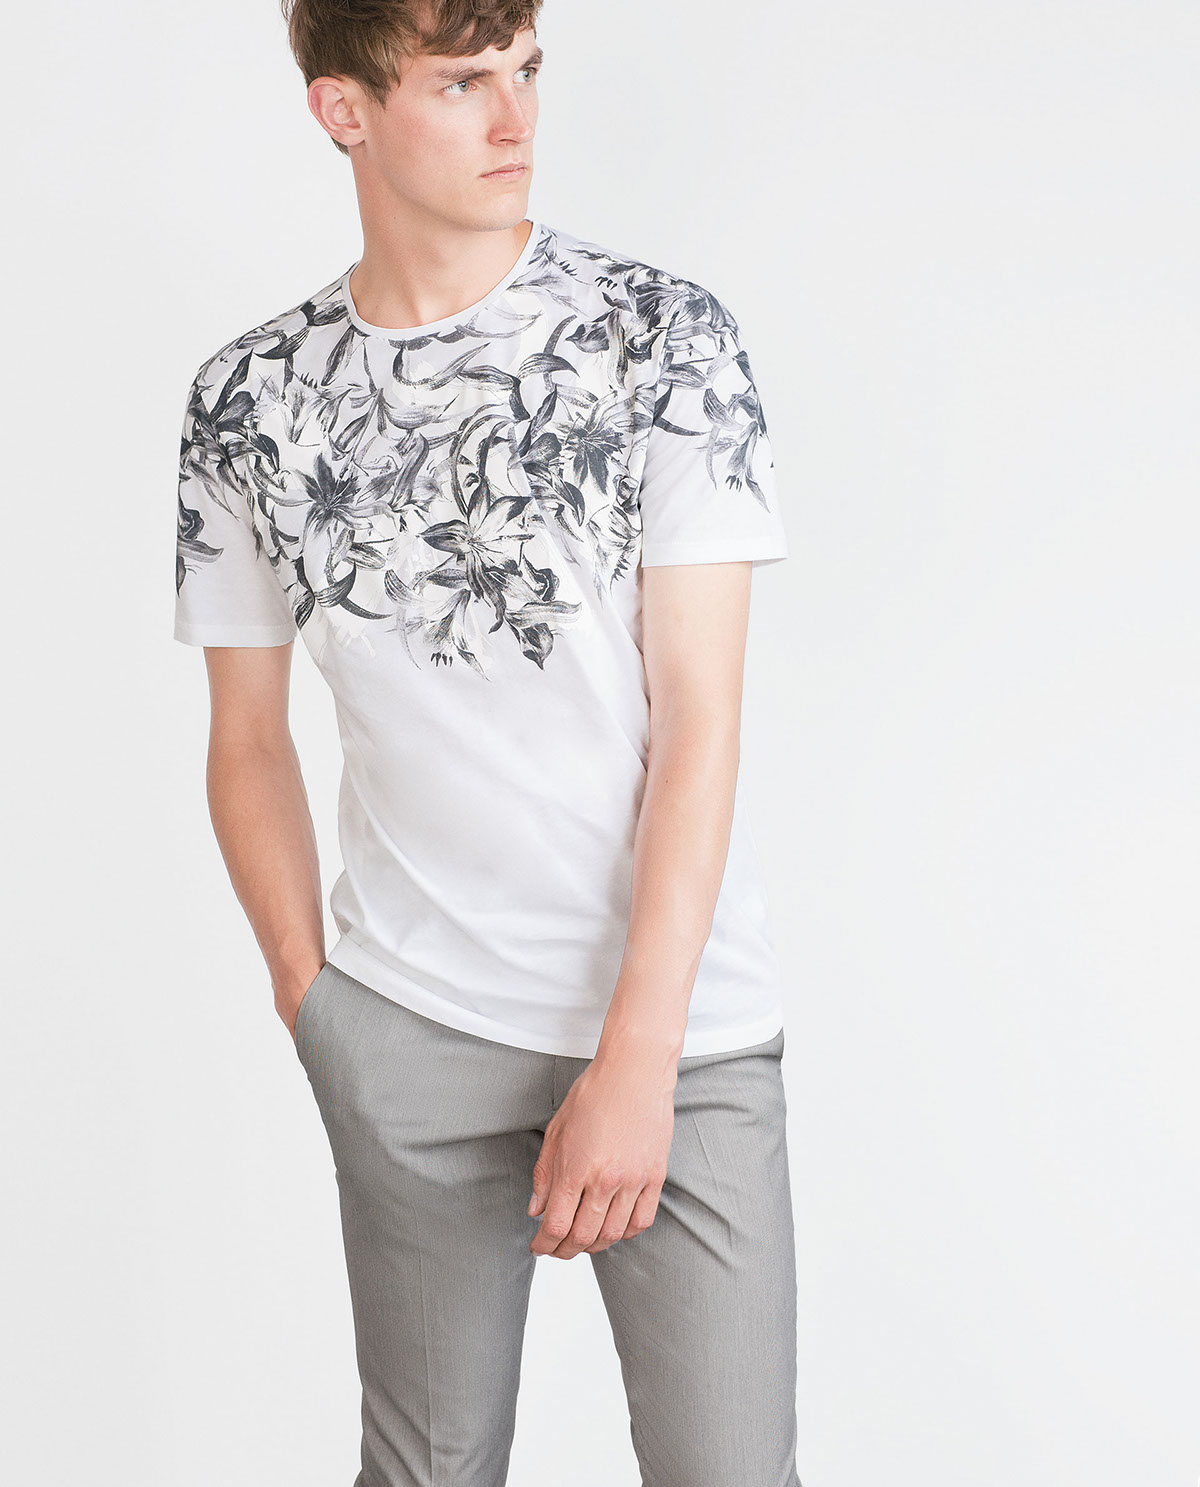 Zara man, 2015/16 New Collection! on Behance